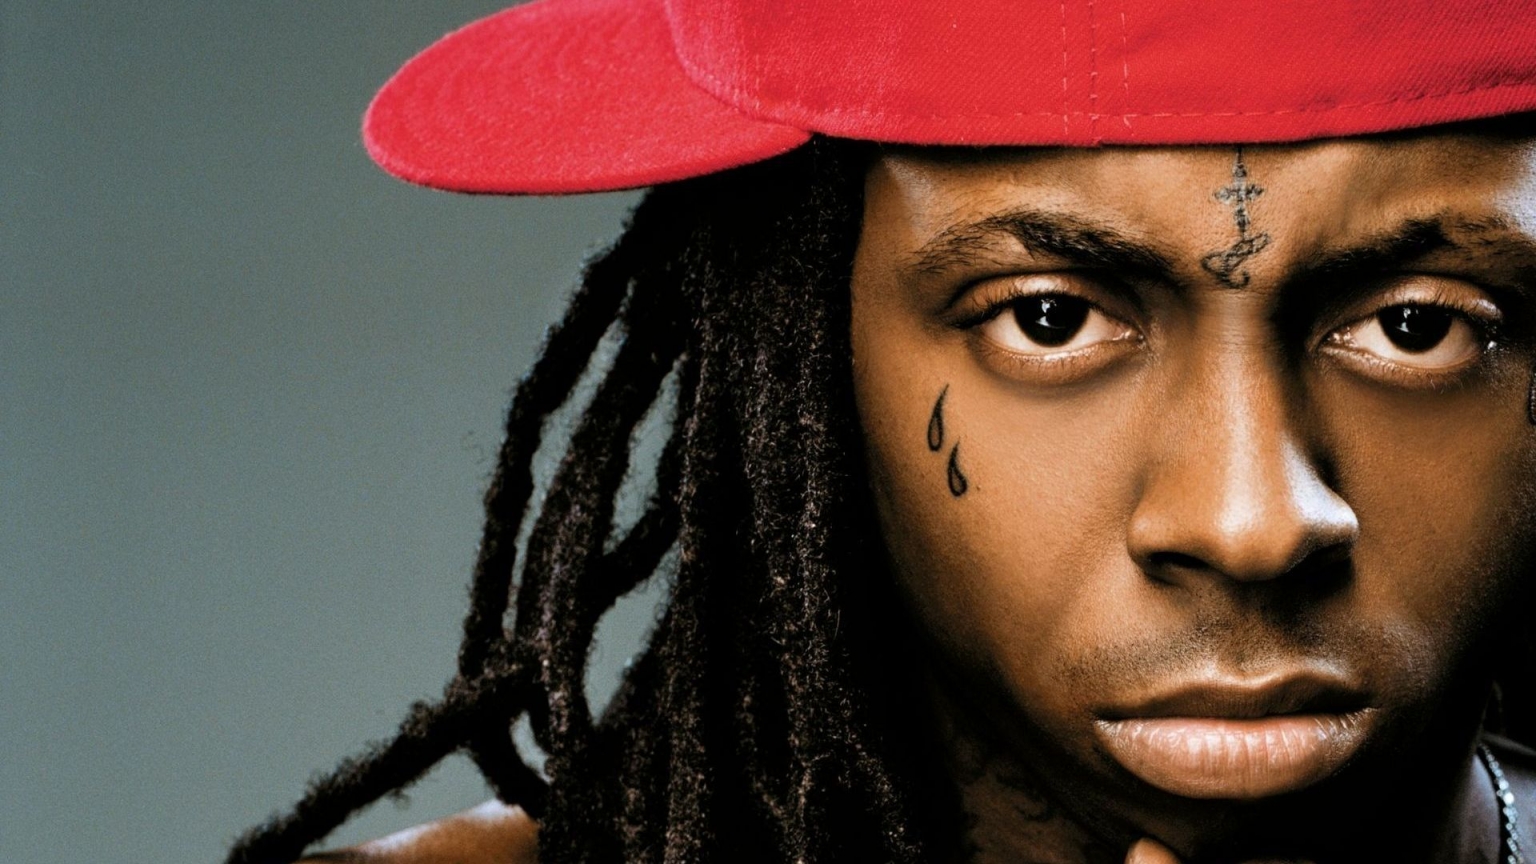 Lil Wayne for 1536 x 864 HDTV resolution